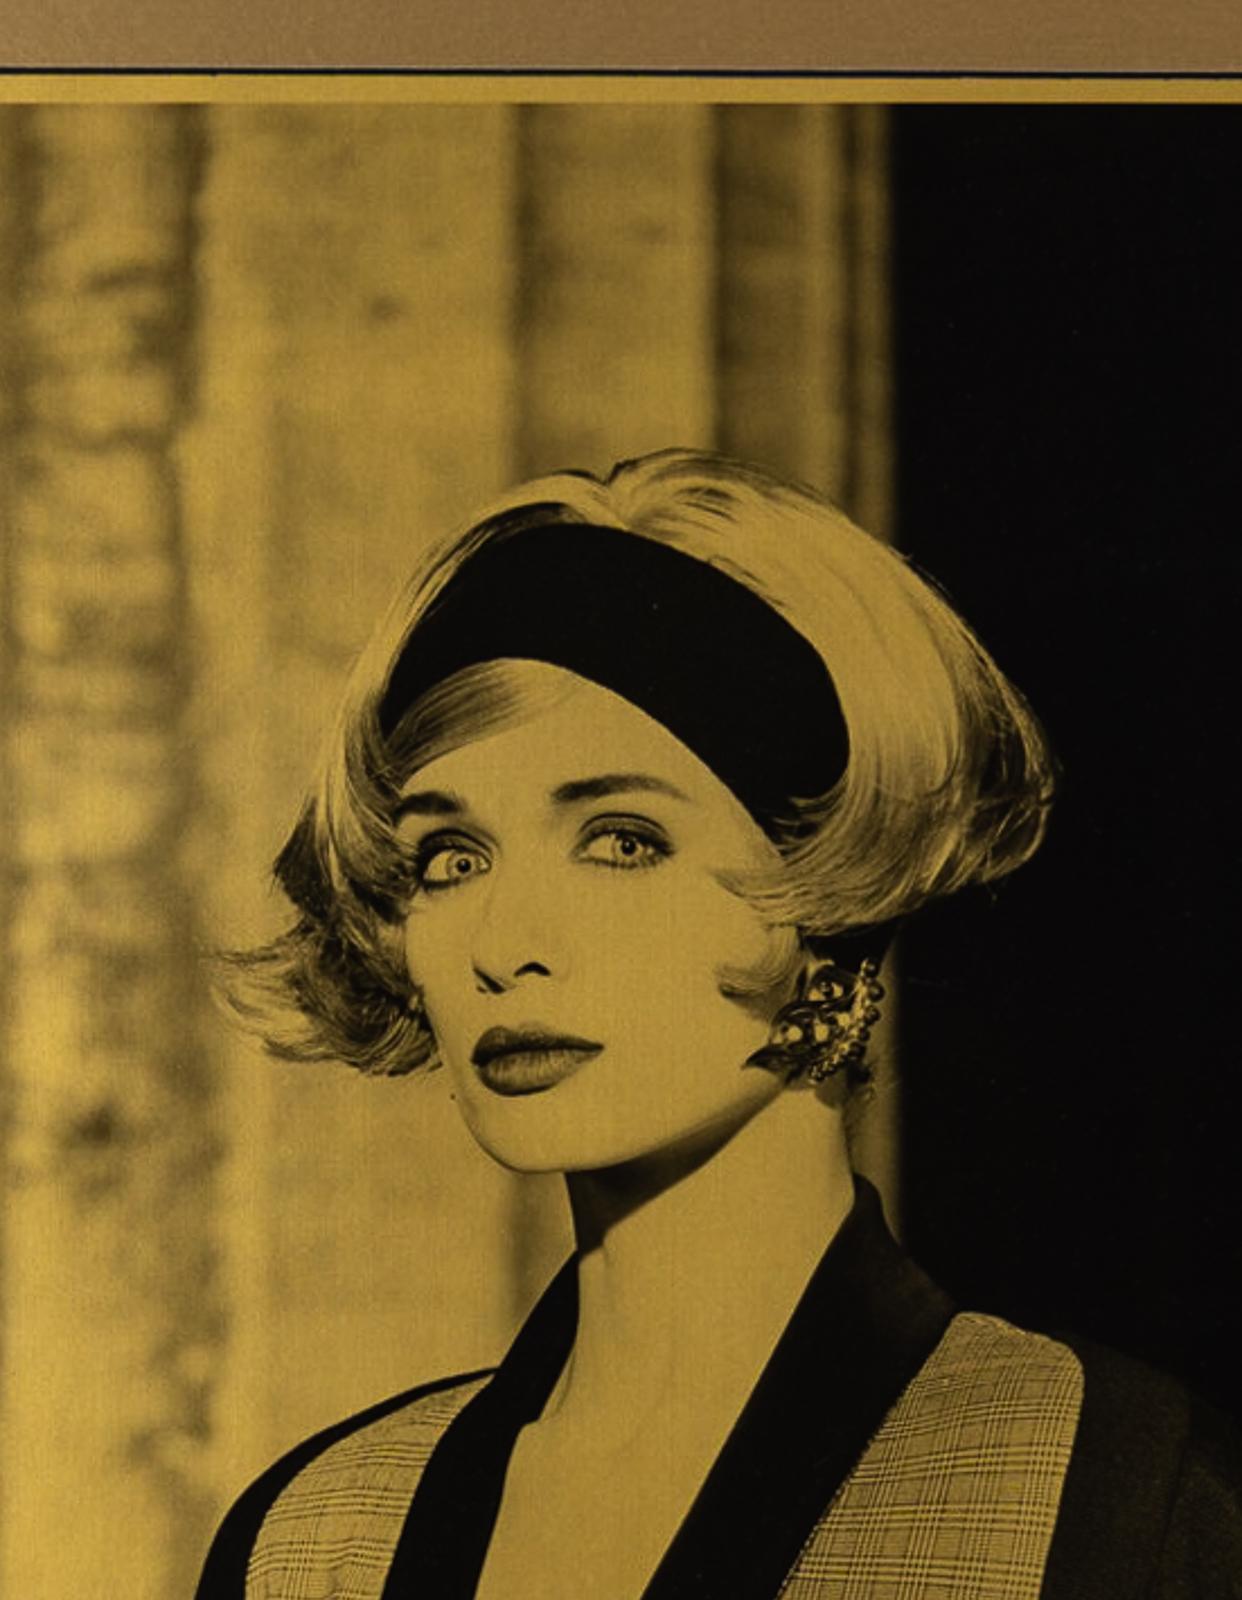 Modern Original Photograph of Linda Evangelista by Karl Lagerfeld